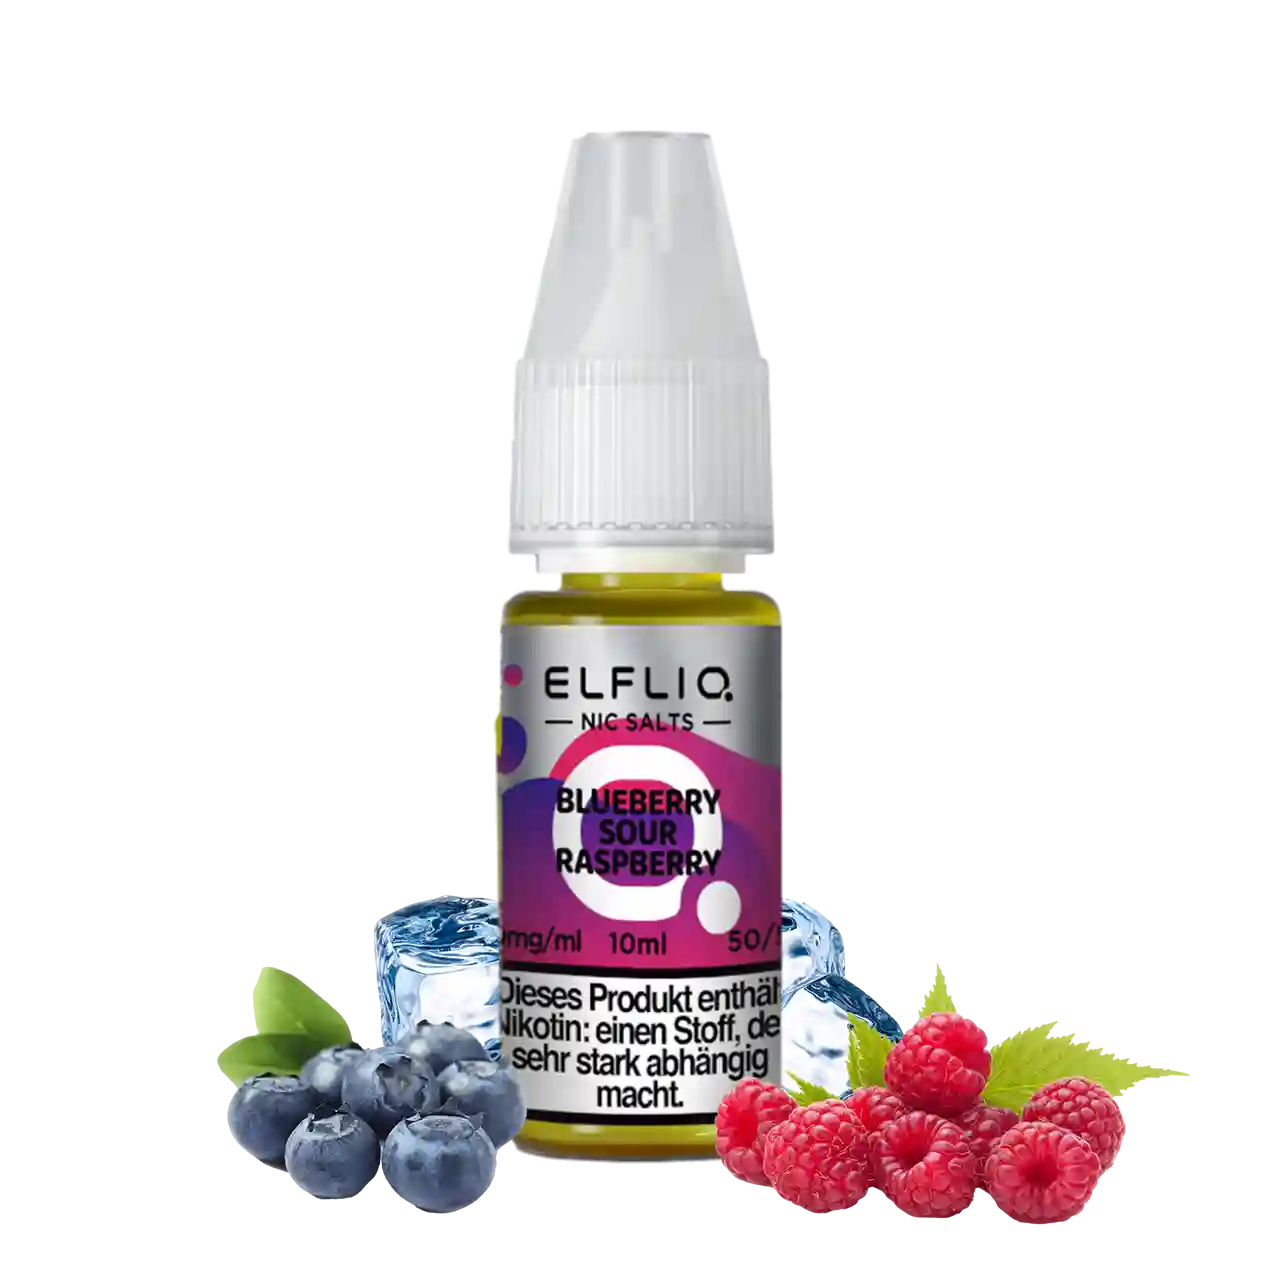 Elfliq Blueberry Sour Raspberry Nic Salt Liquid